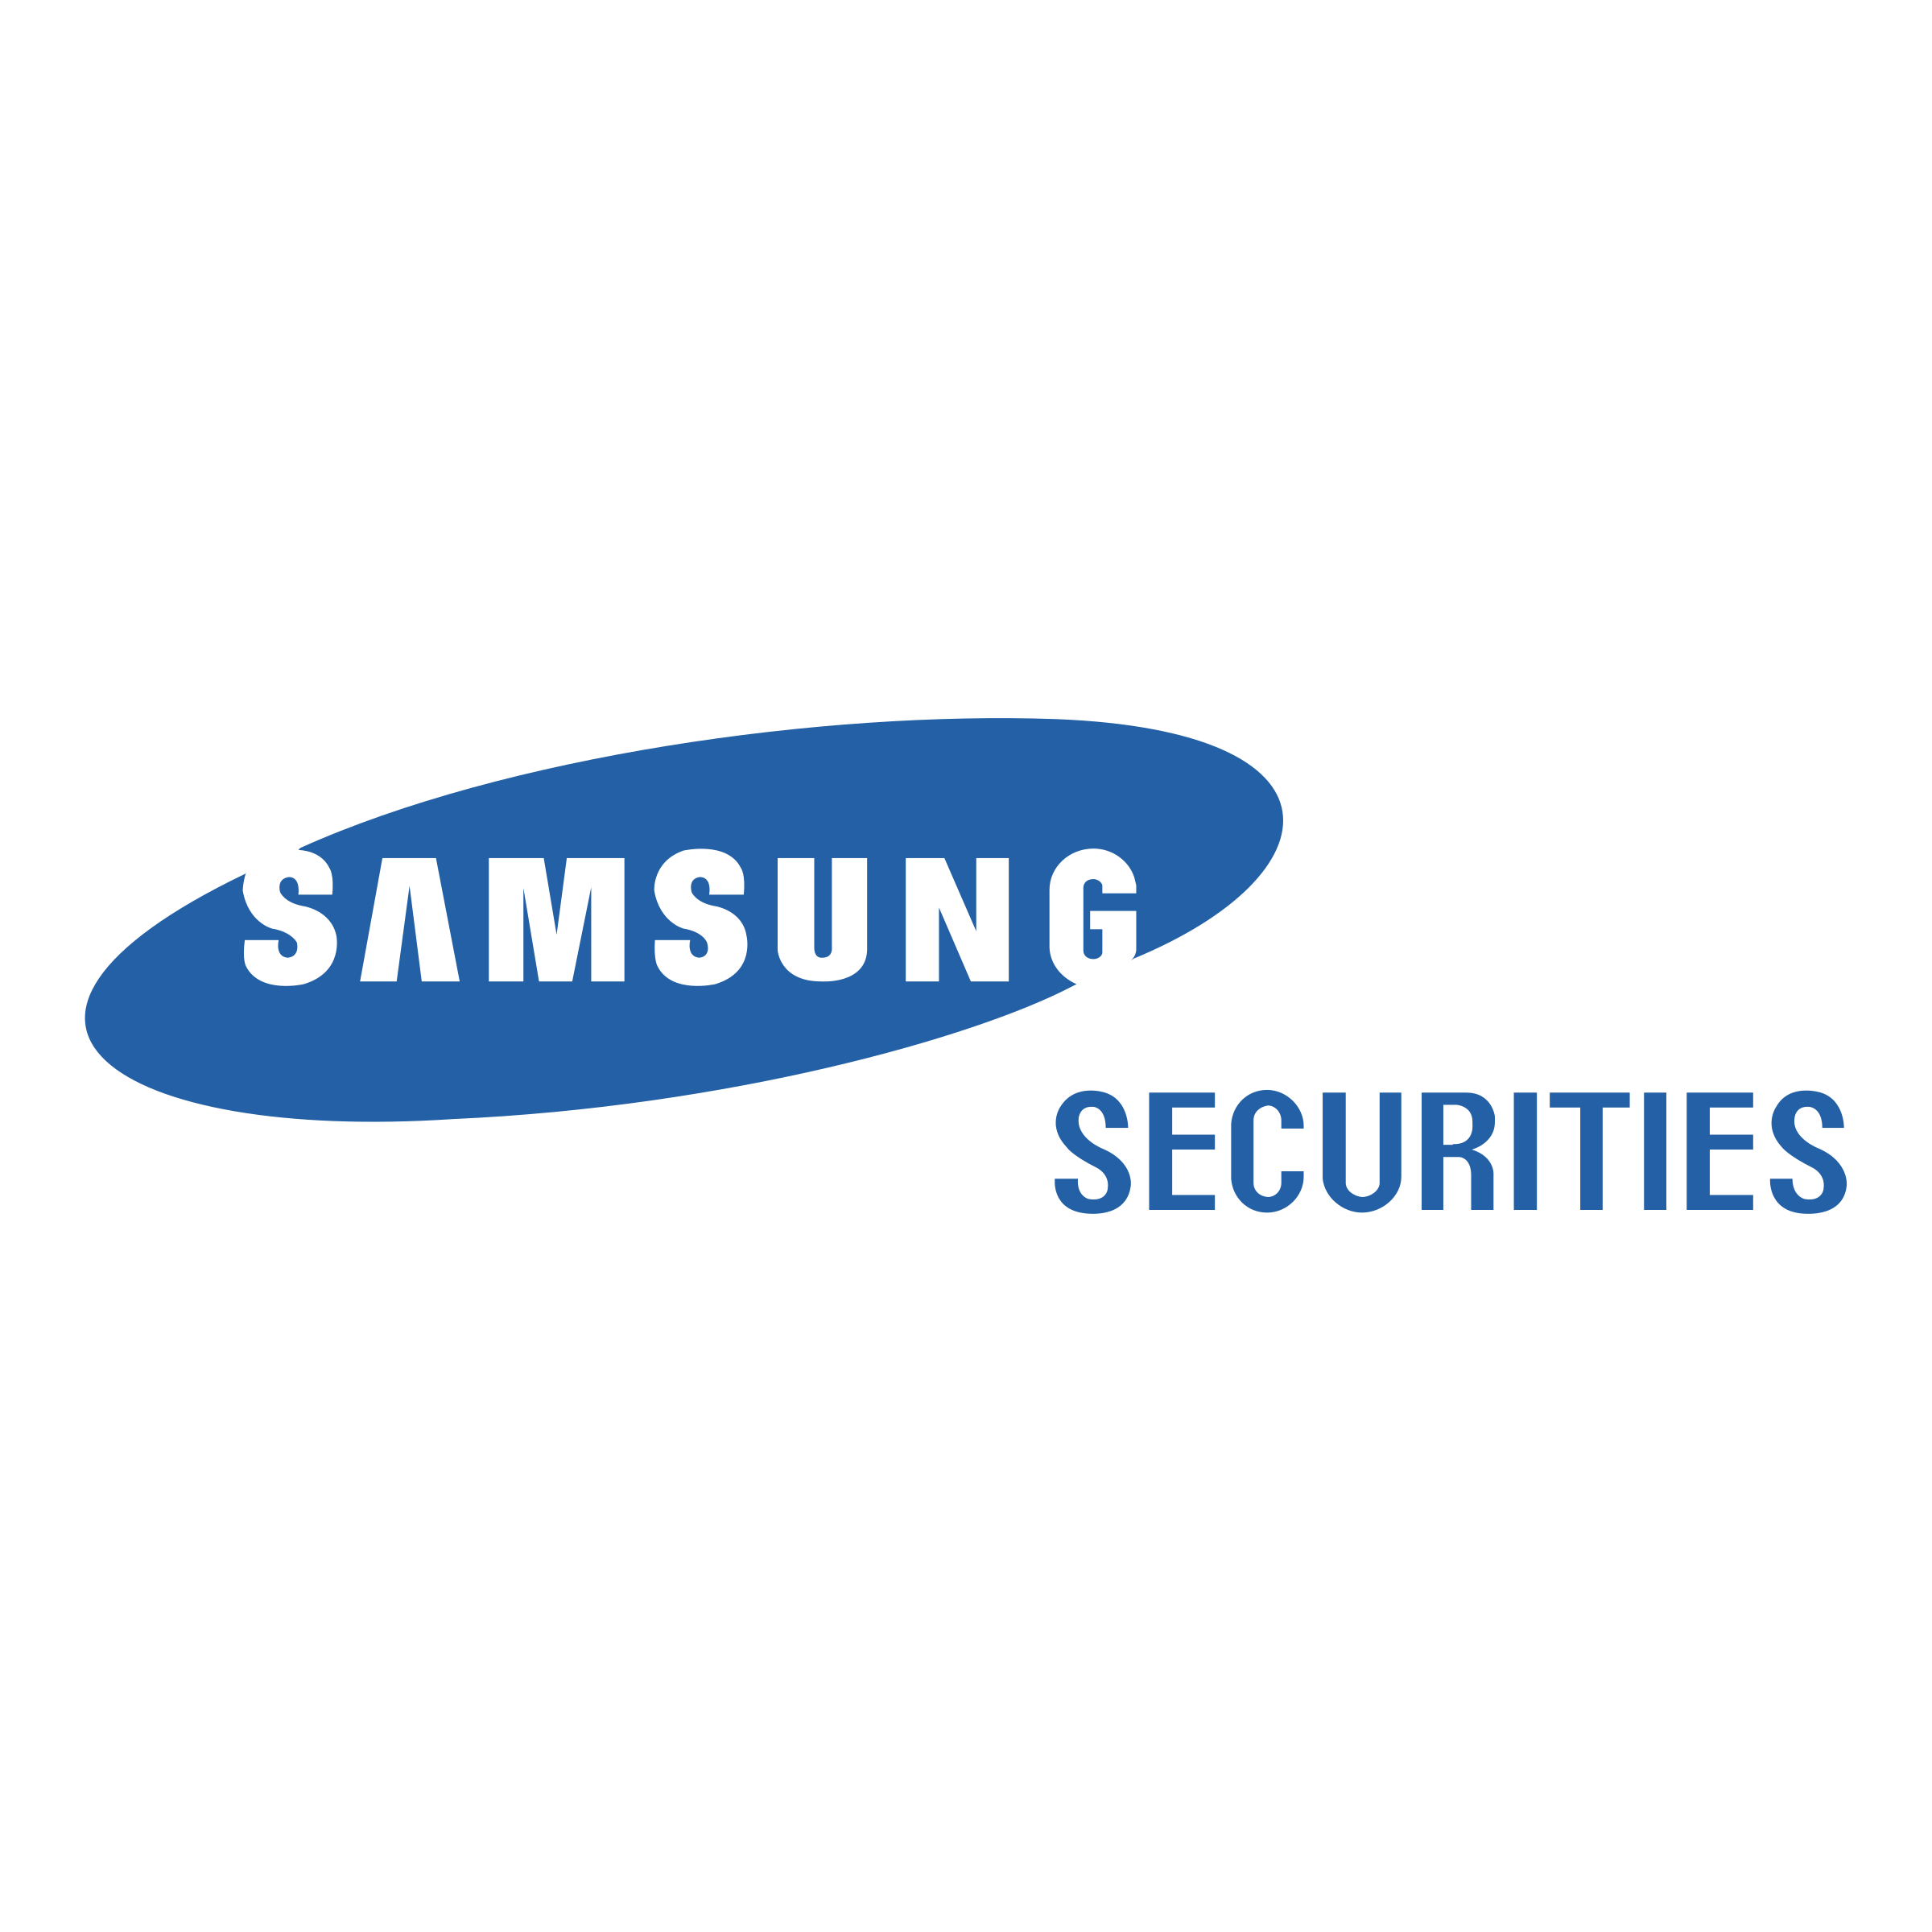 Samsung Securities Brand Logo